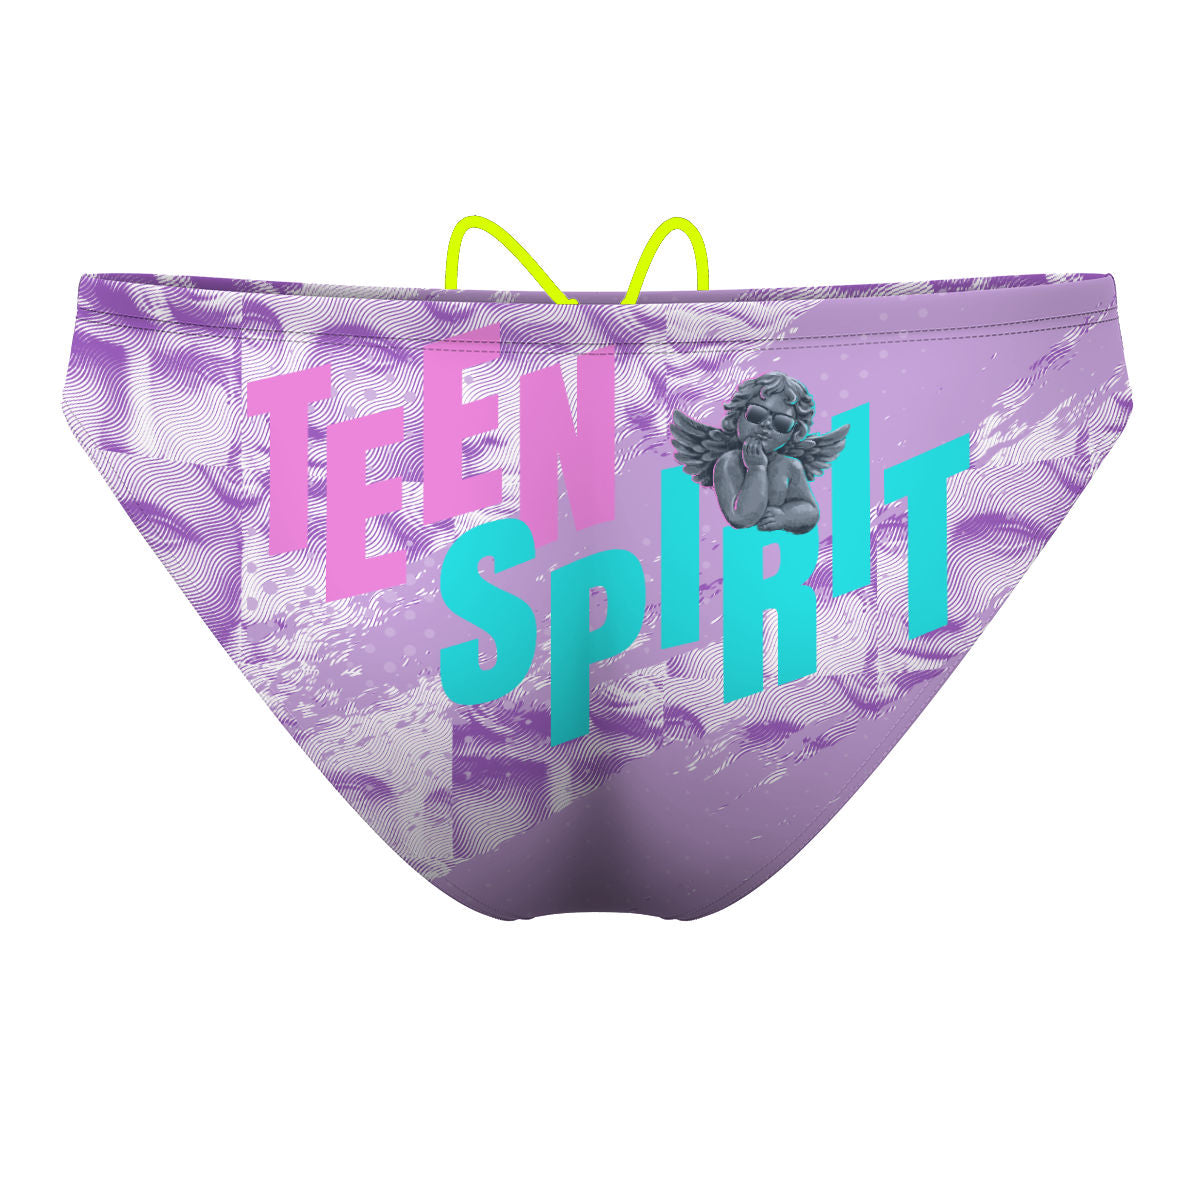 Teen Spirit - Waterpolo Brief Swimsuit